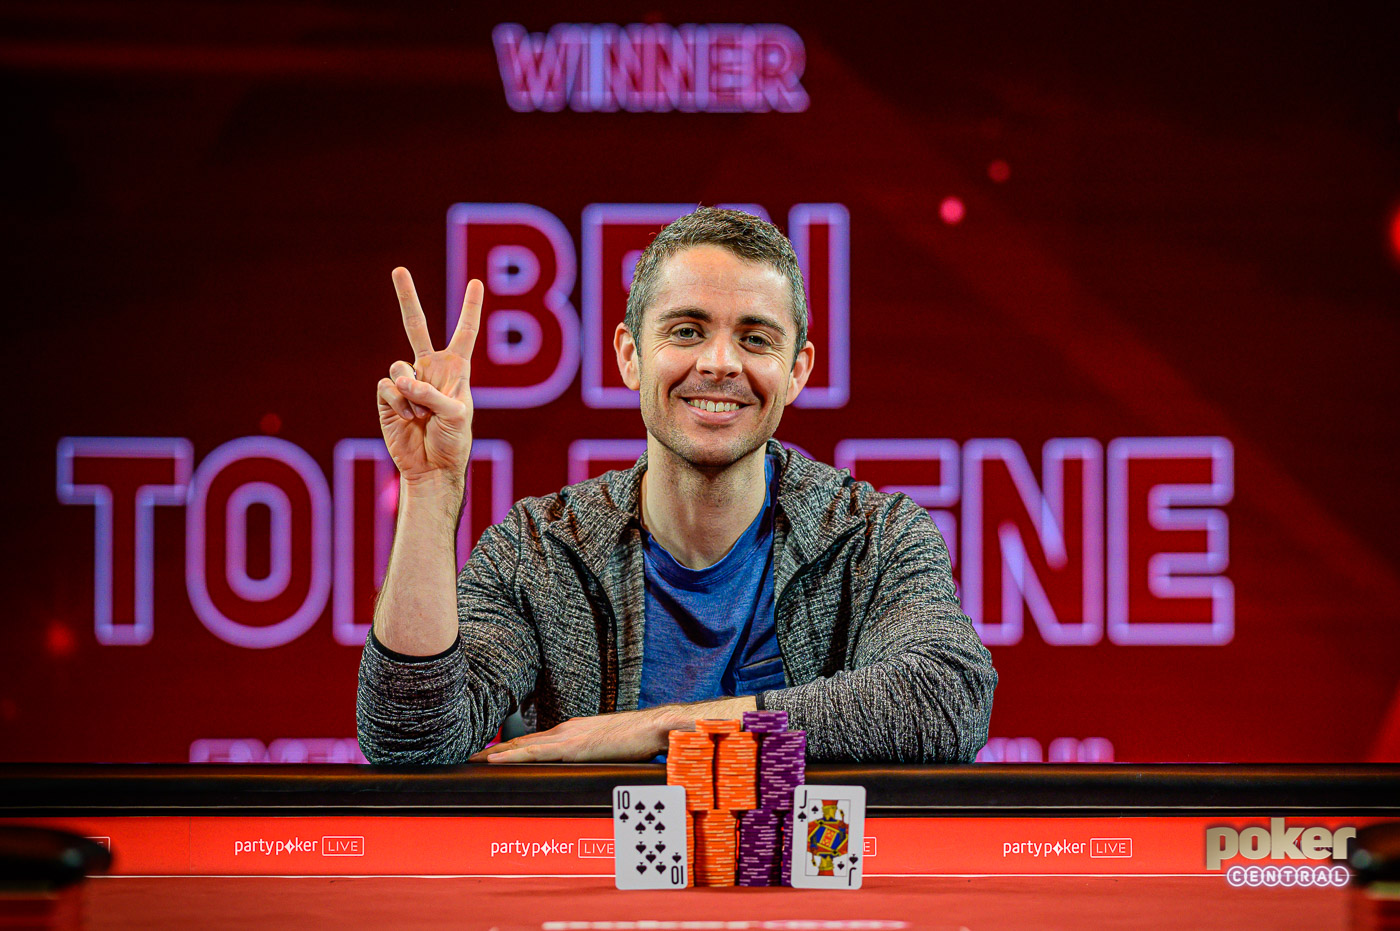 Ben Tollerene after winning British Poker Open Event #10 for £840,000.